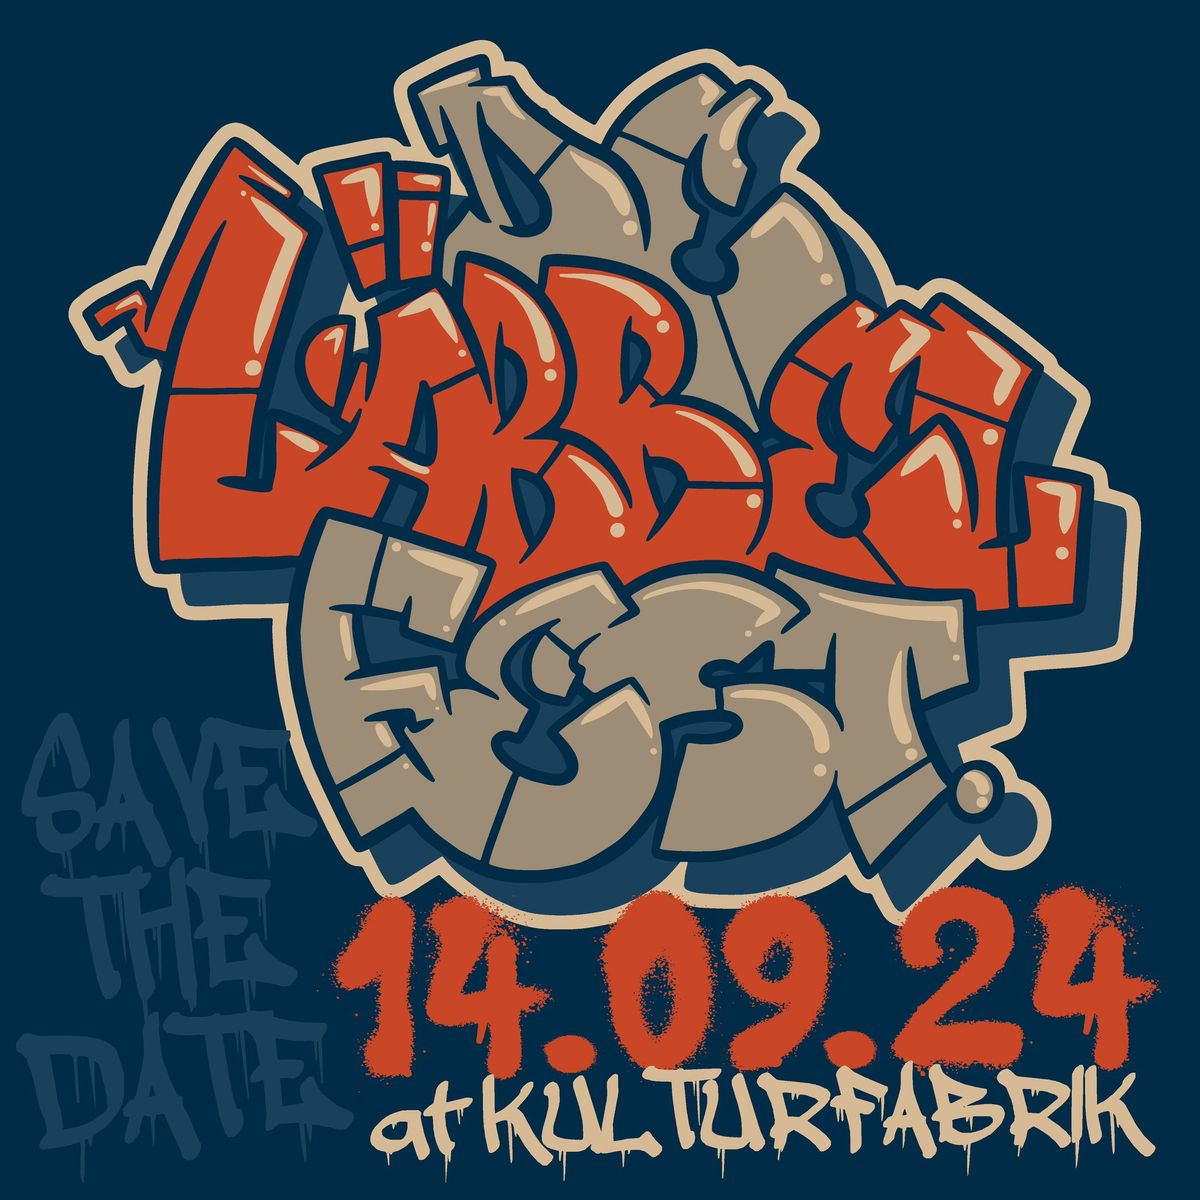 DE L\u00c4BBEL FEST @Kulturfabrik